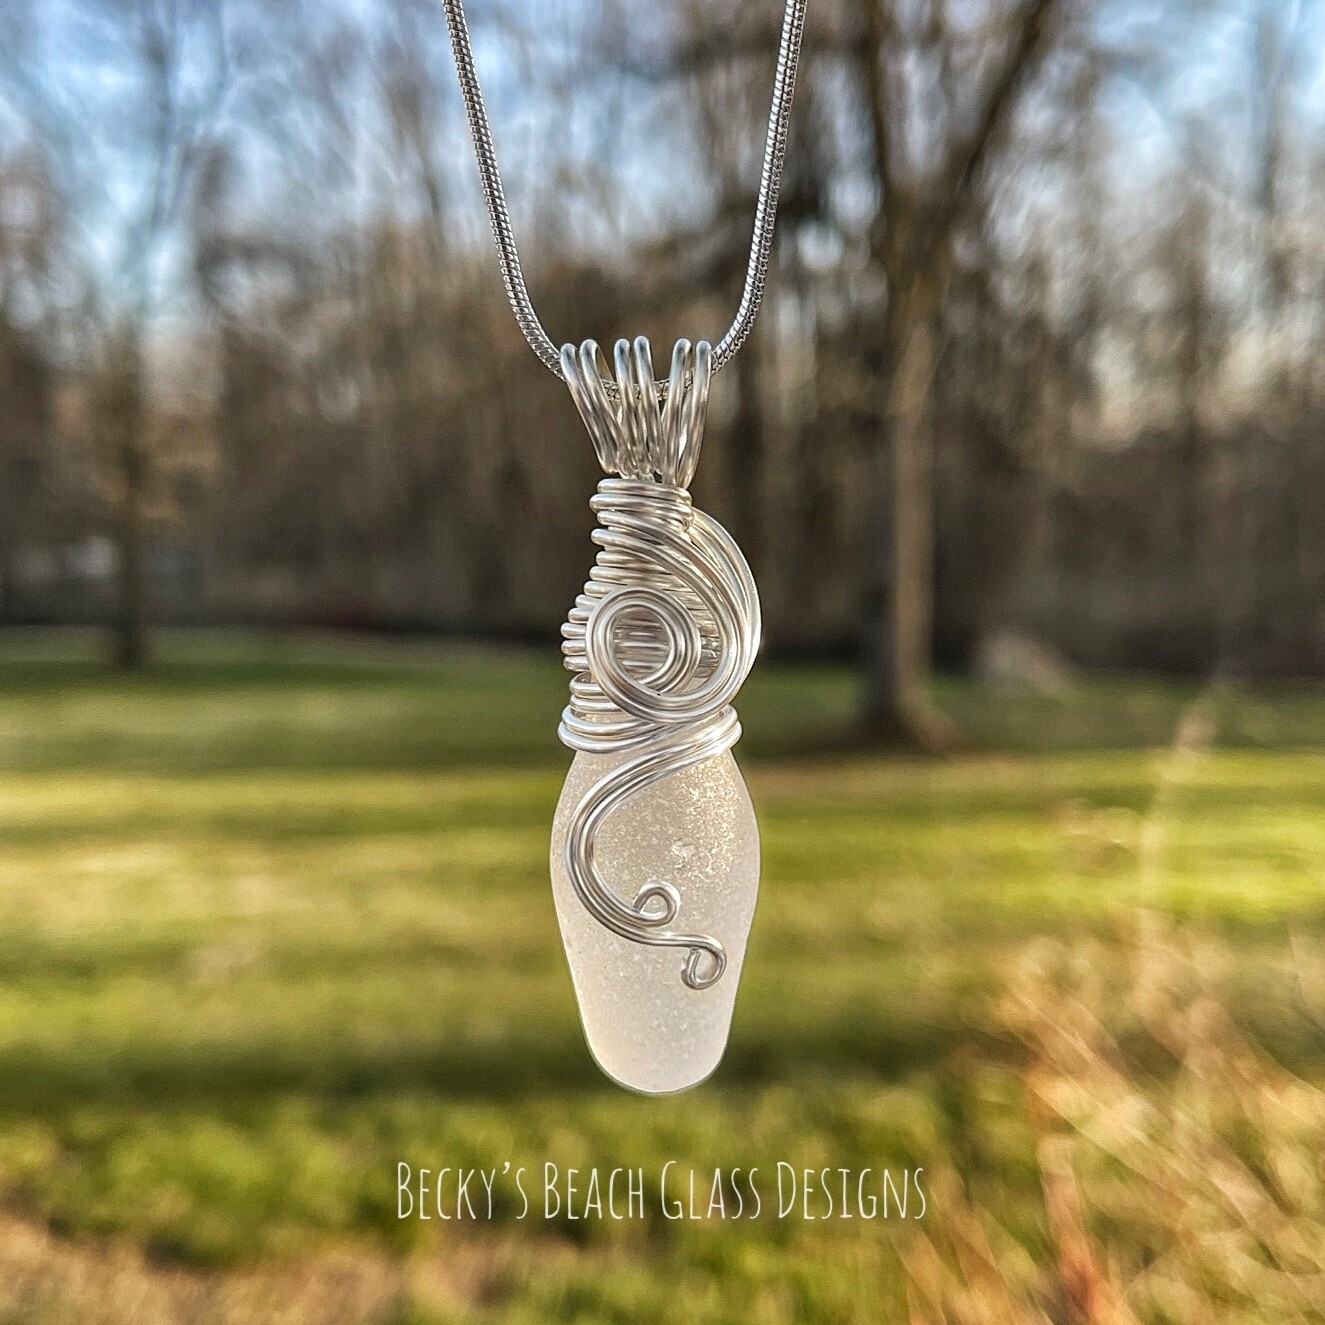 Bowling Pin Shaped Sea Glass Pendant Necklace